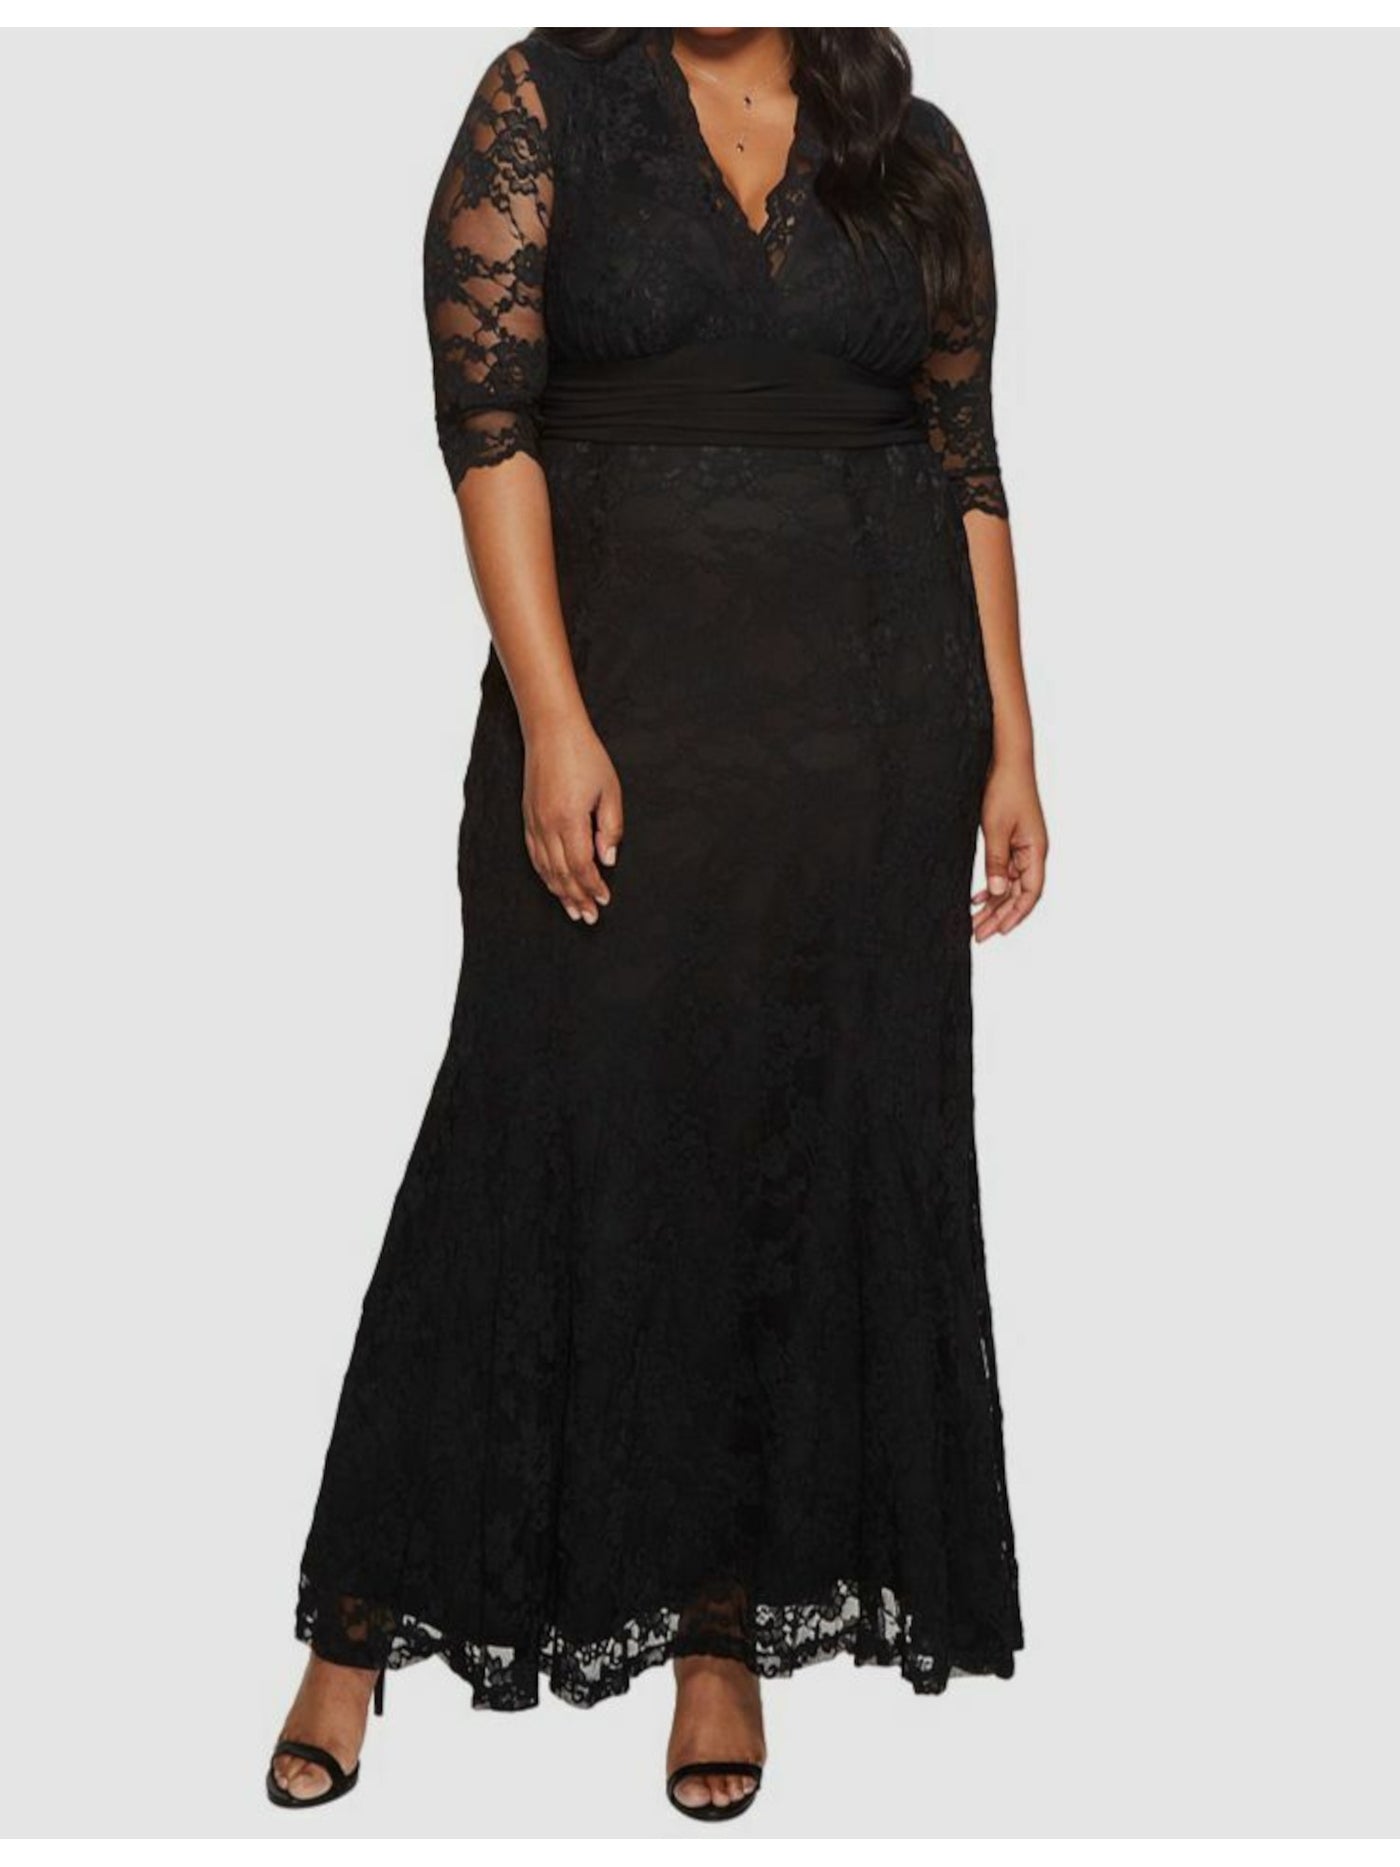 KIYONNA Womens Black Lace Lined Elbow Sleeve Surplice Neckline Maxi Evening Shift Dress Plus 2X